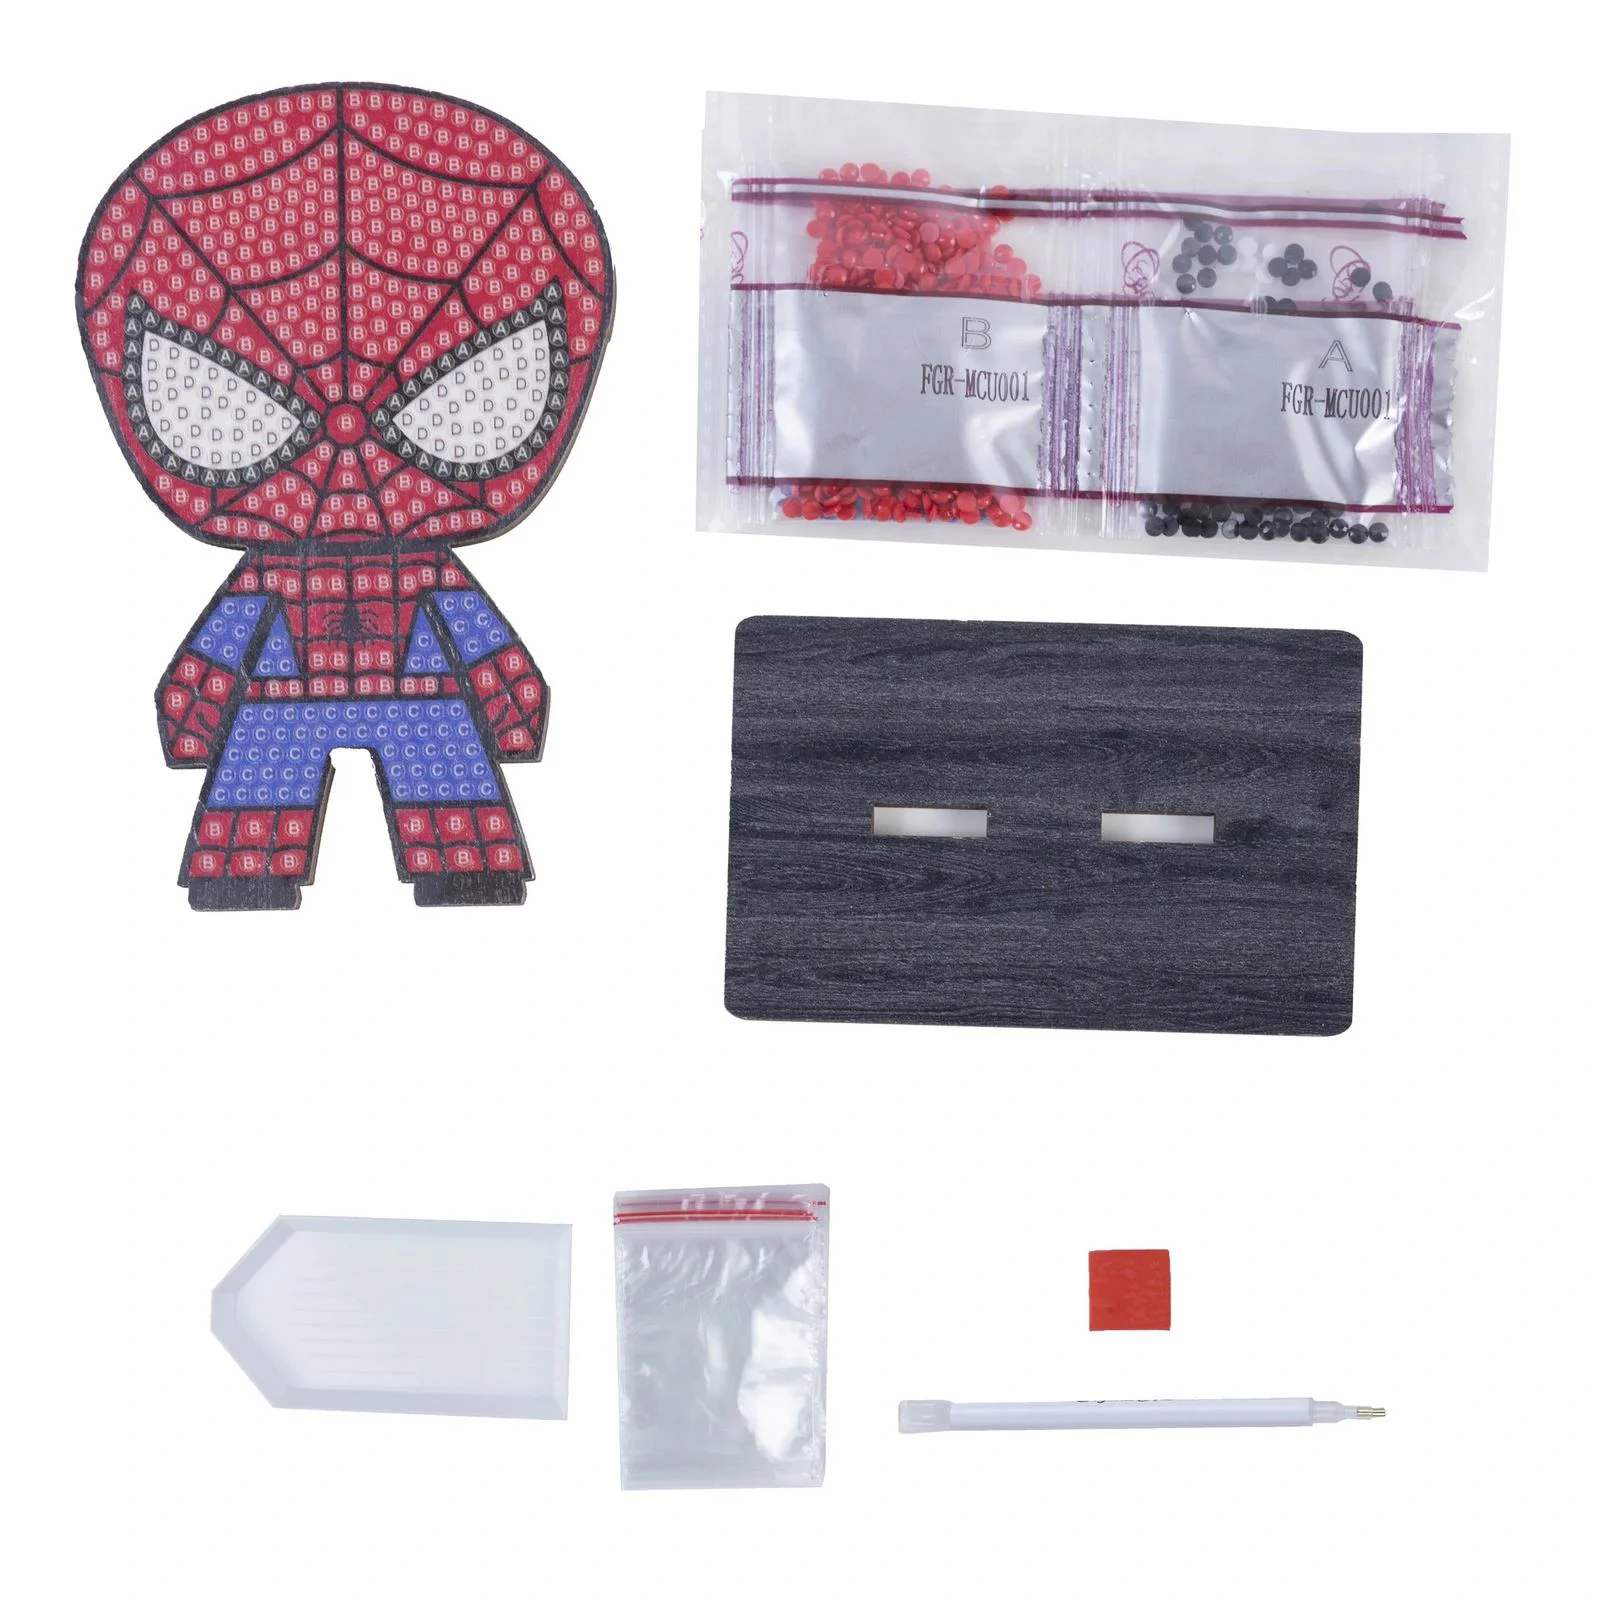 Набор для творчества Spider-Man Craft Buddy, Crystal Art